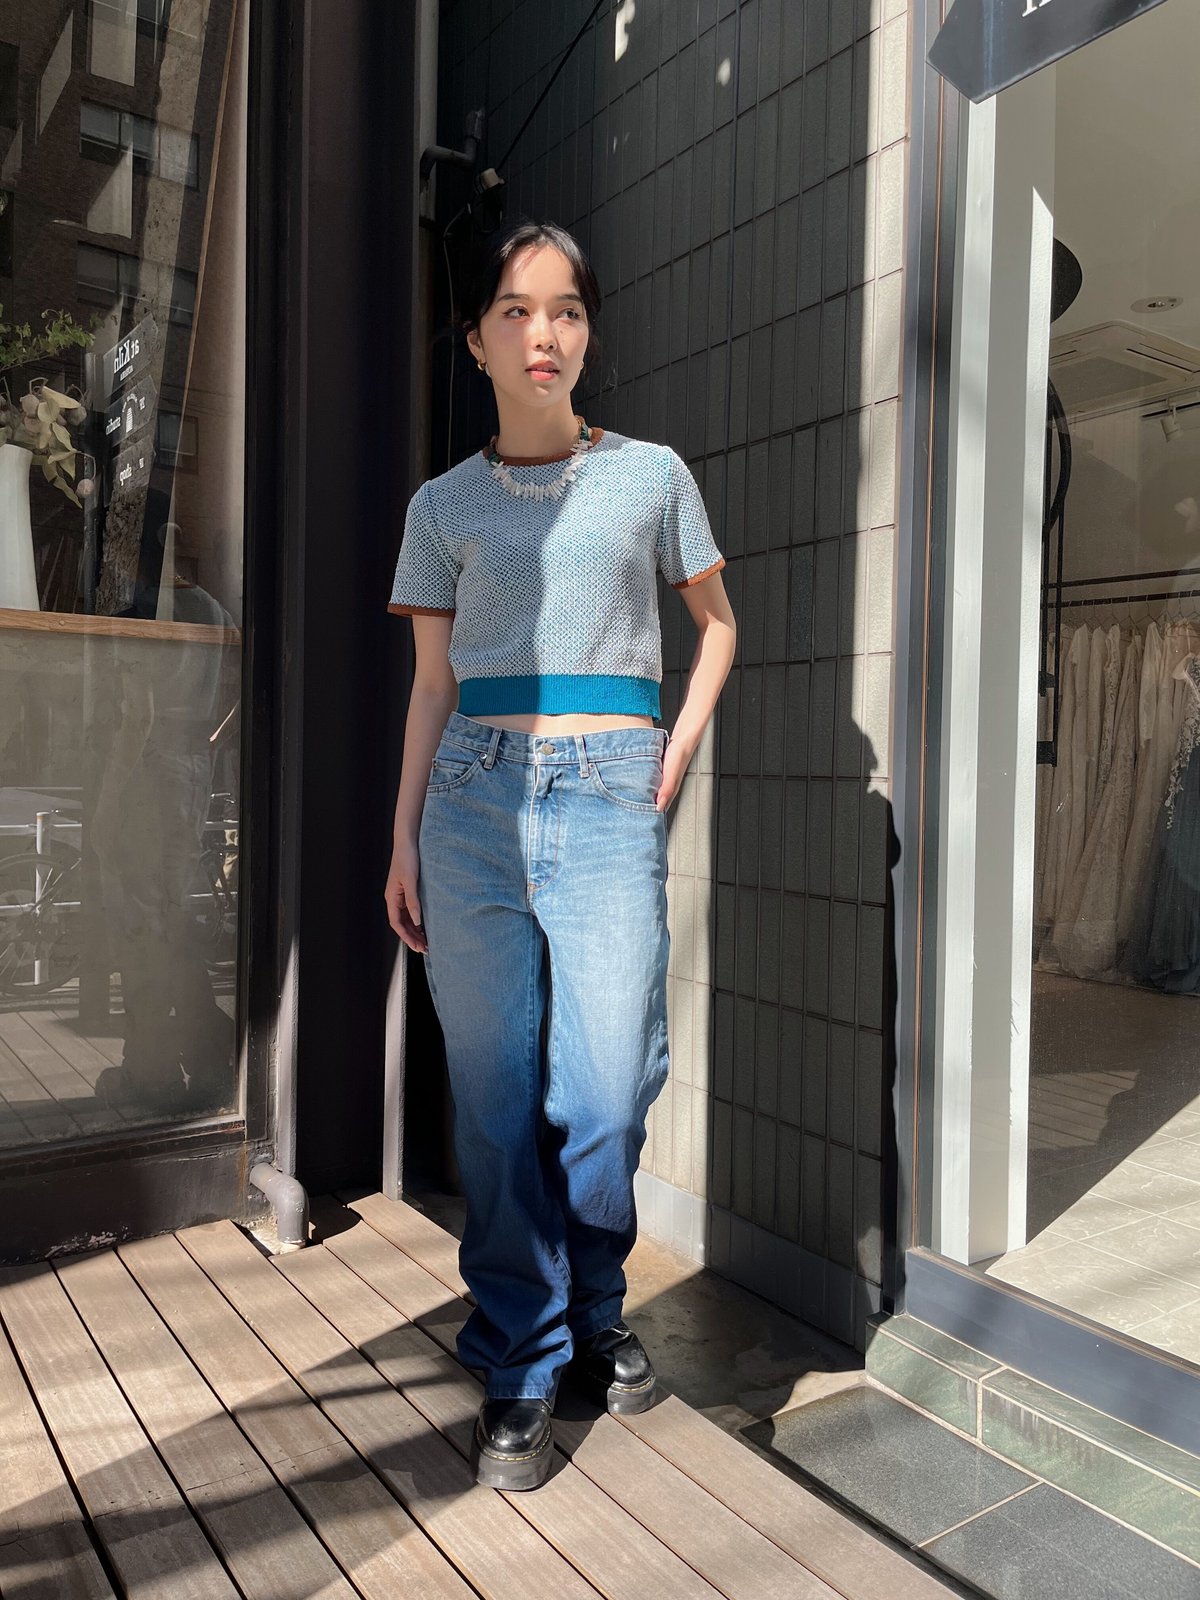 MURRAL / Jelly knit top | jurk tokyo